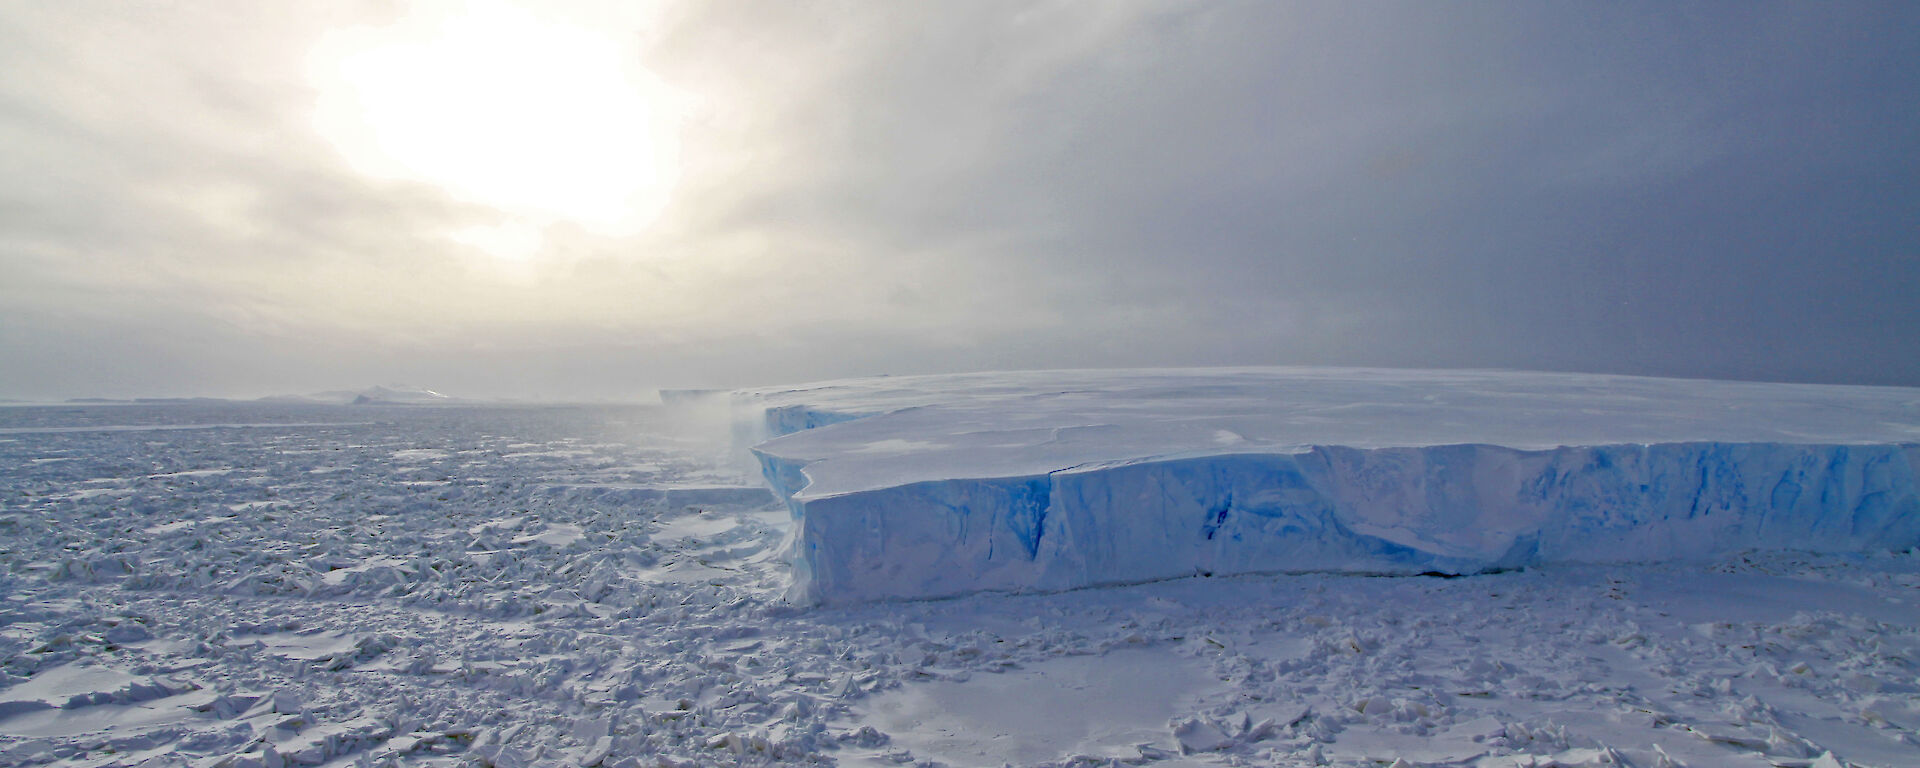 Sea ice and tabular icebergs